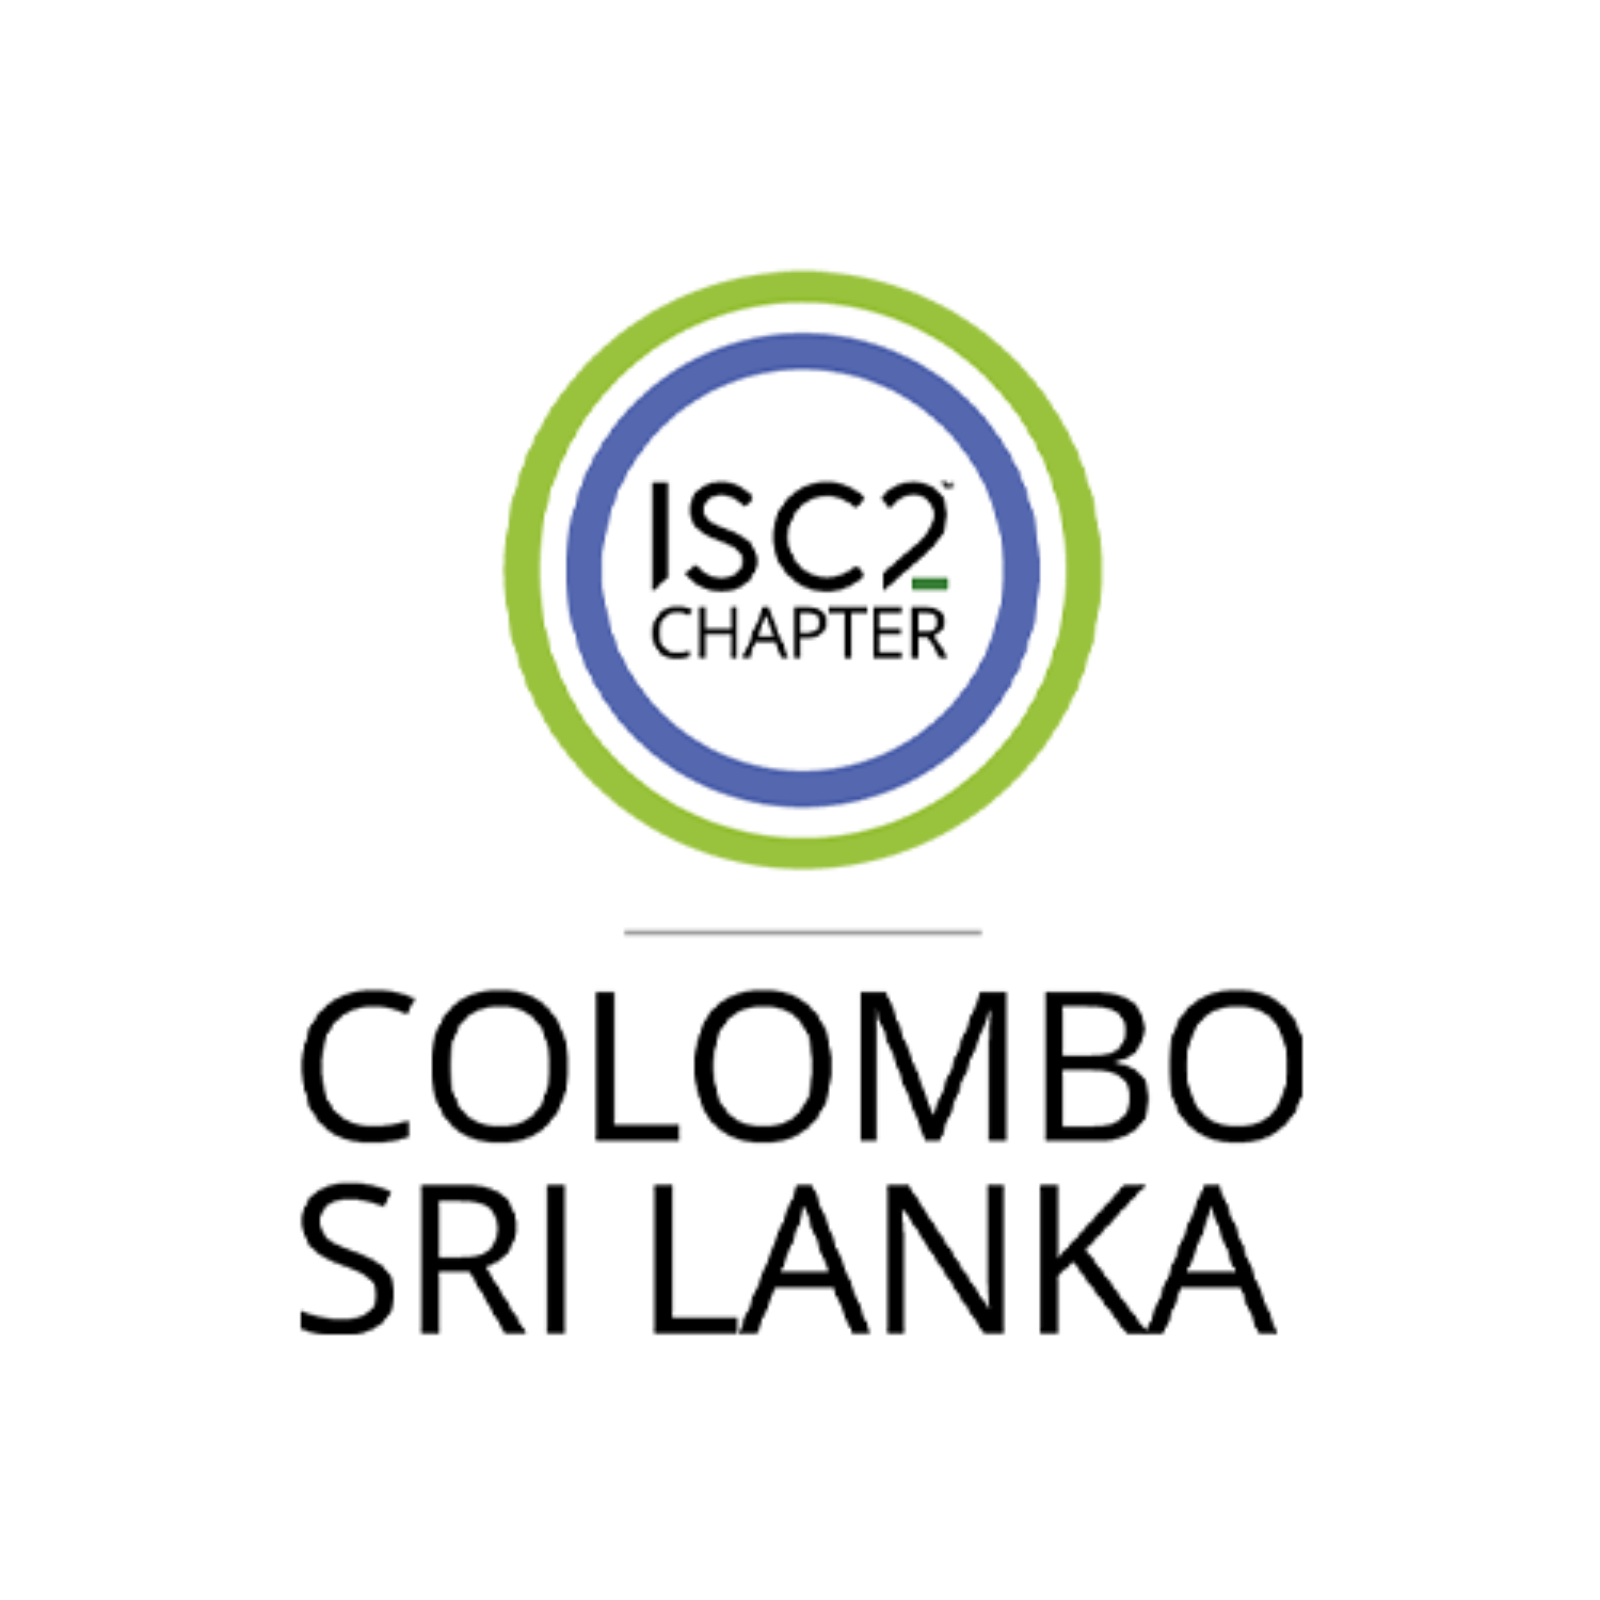 Rocketeer Labs Powers ISC2 Colombo Sri Lanka Chapter